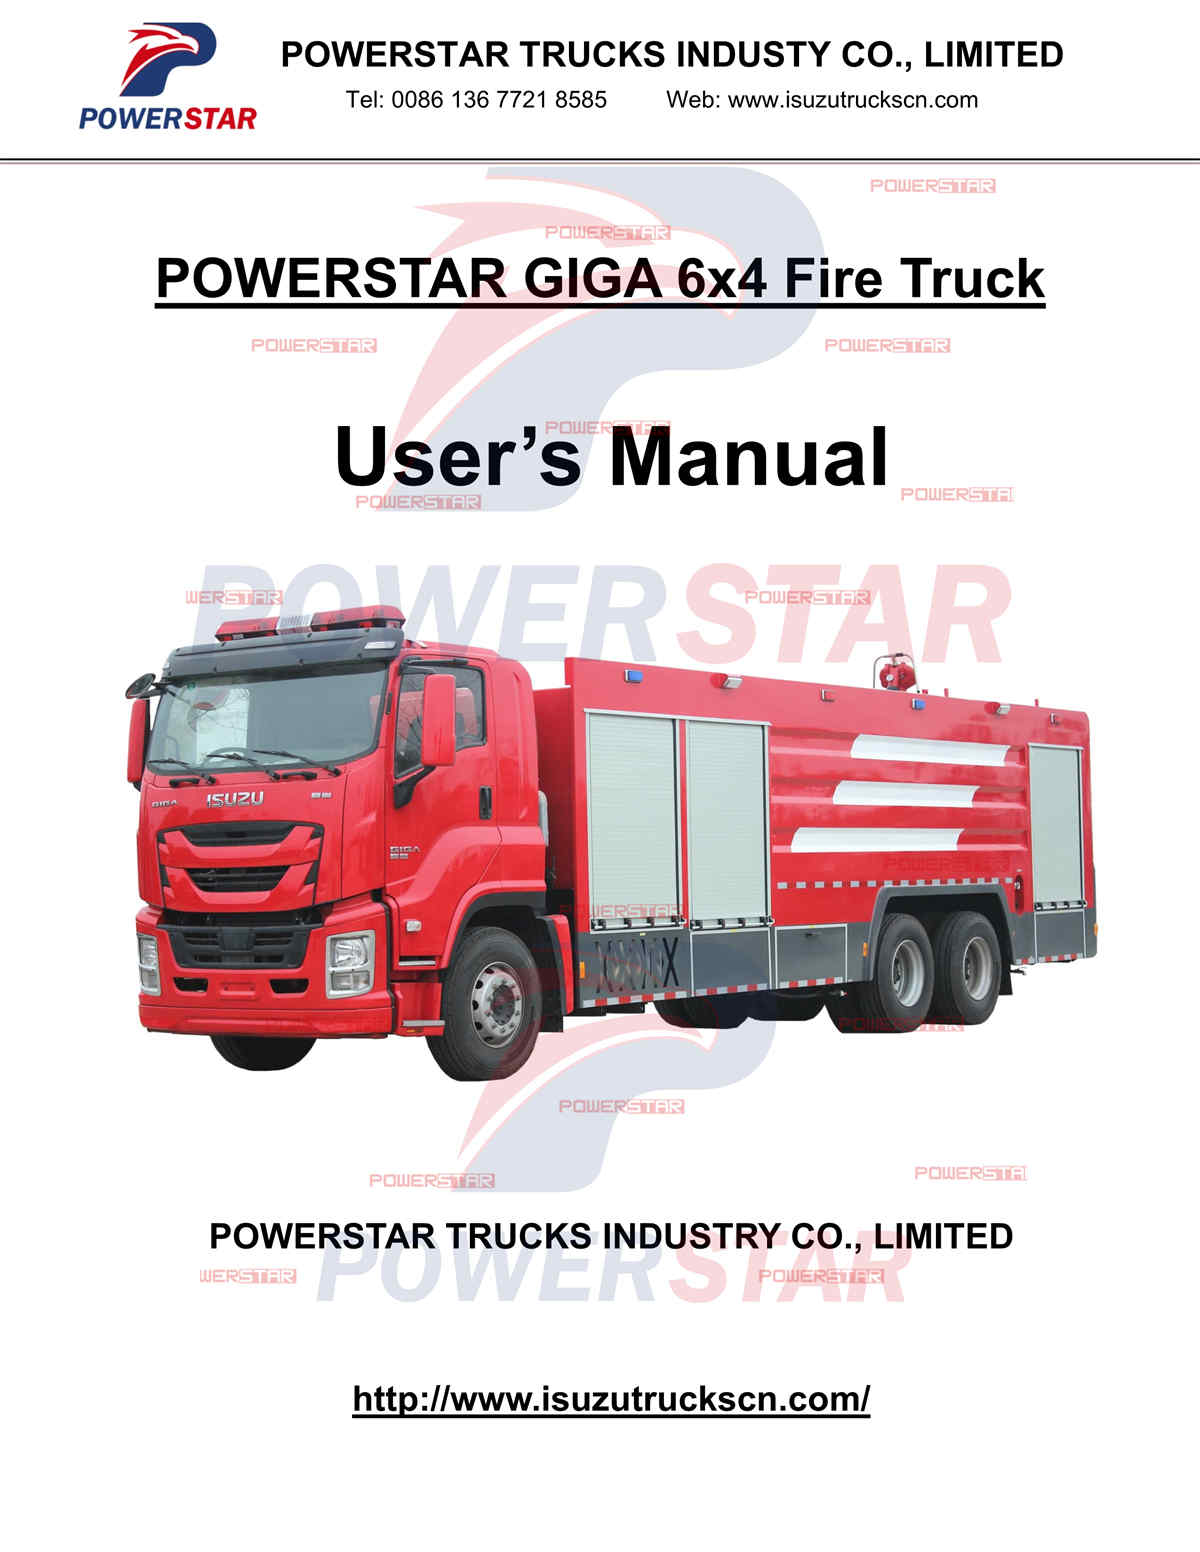 Middle East countries ISUZU GIGA Water & Foam Fire Fighting Trucks User Manual